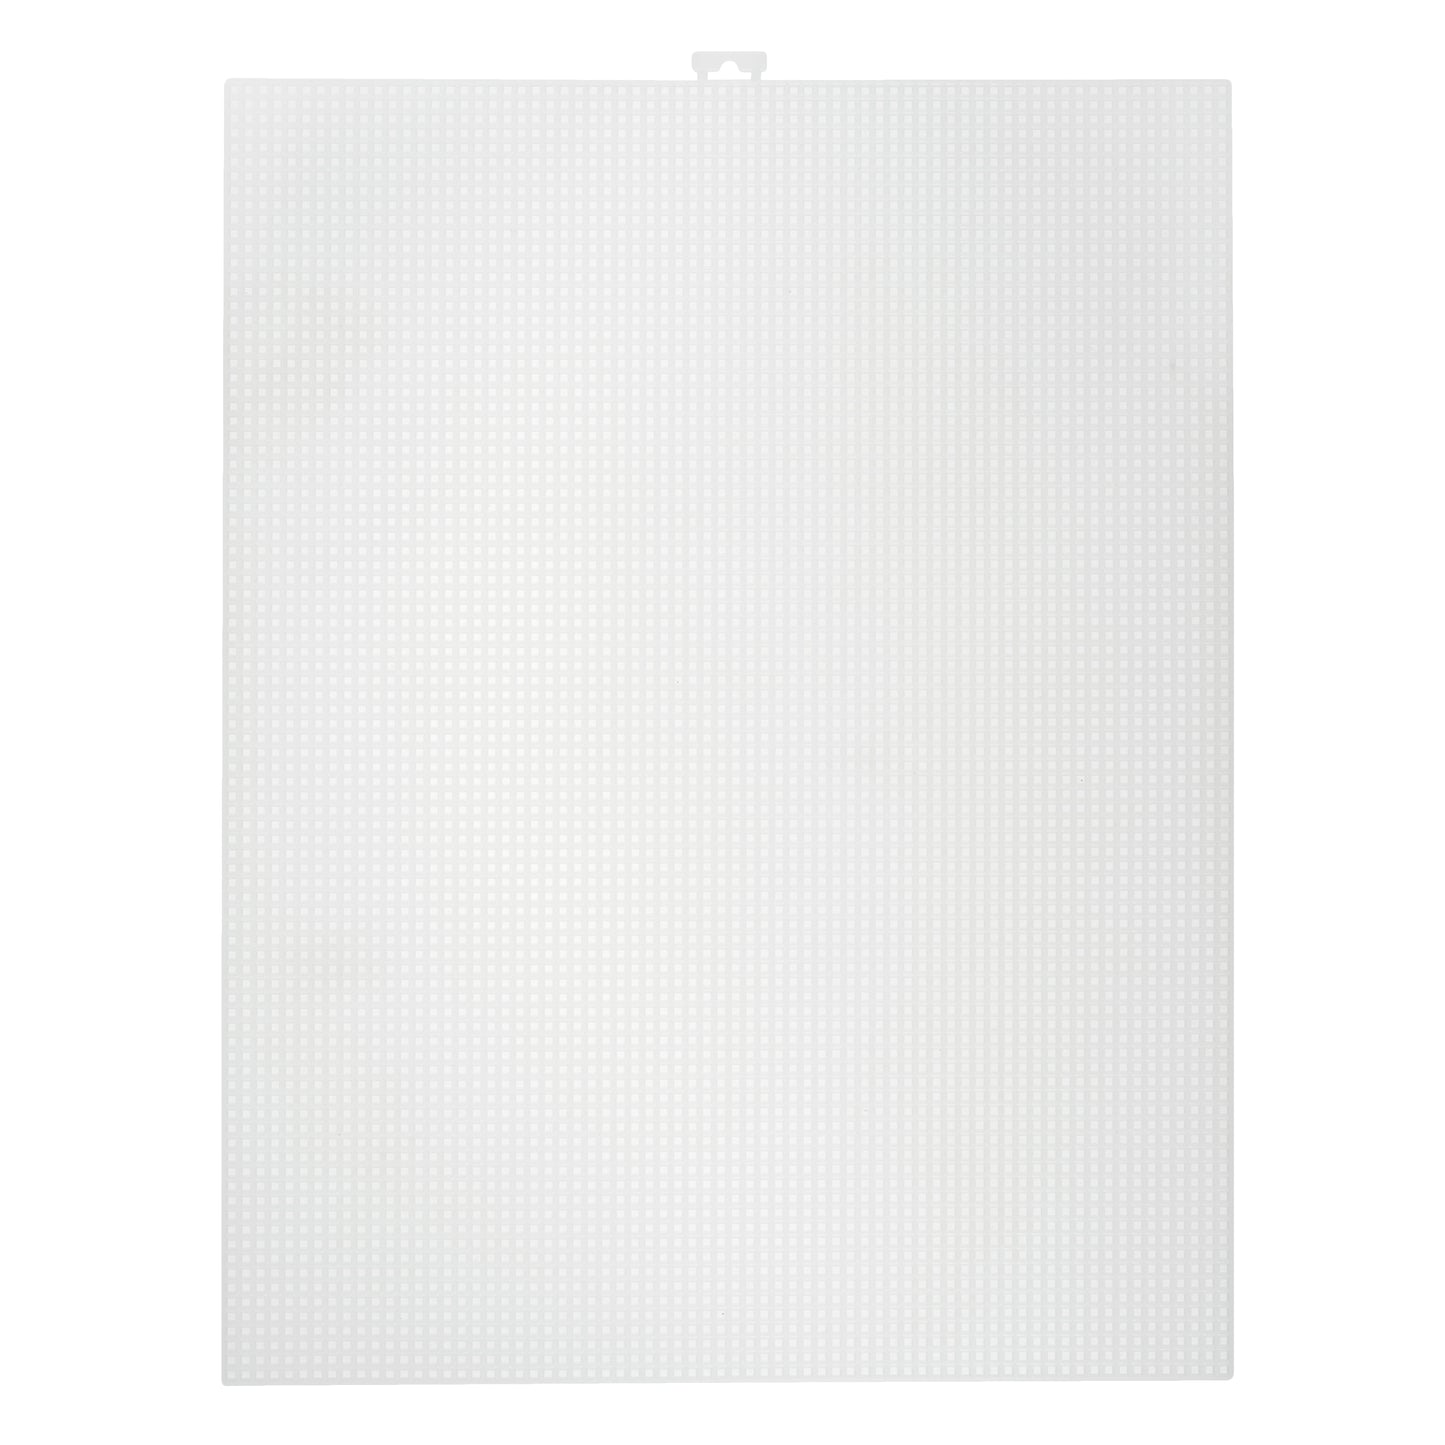 Needlecraft Fabric: Plastic Canvas: 7 holes per inch: 26 x 33cm